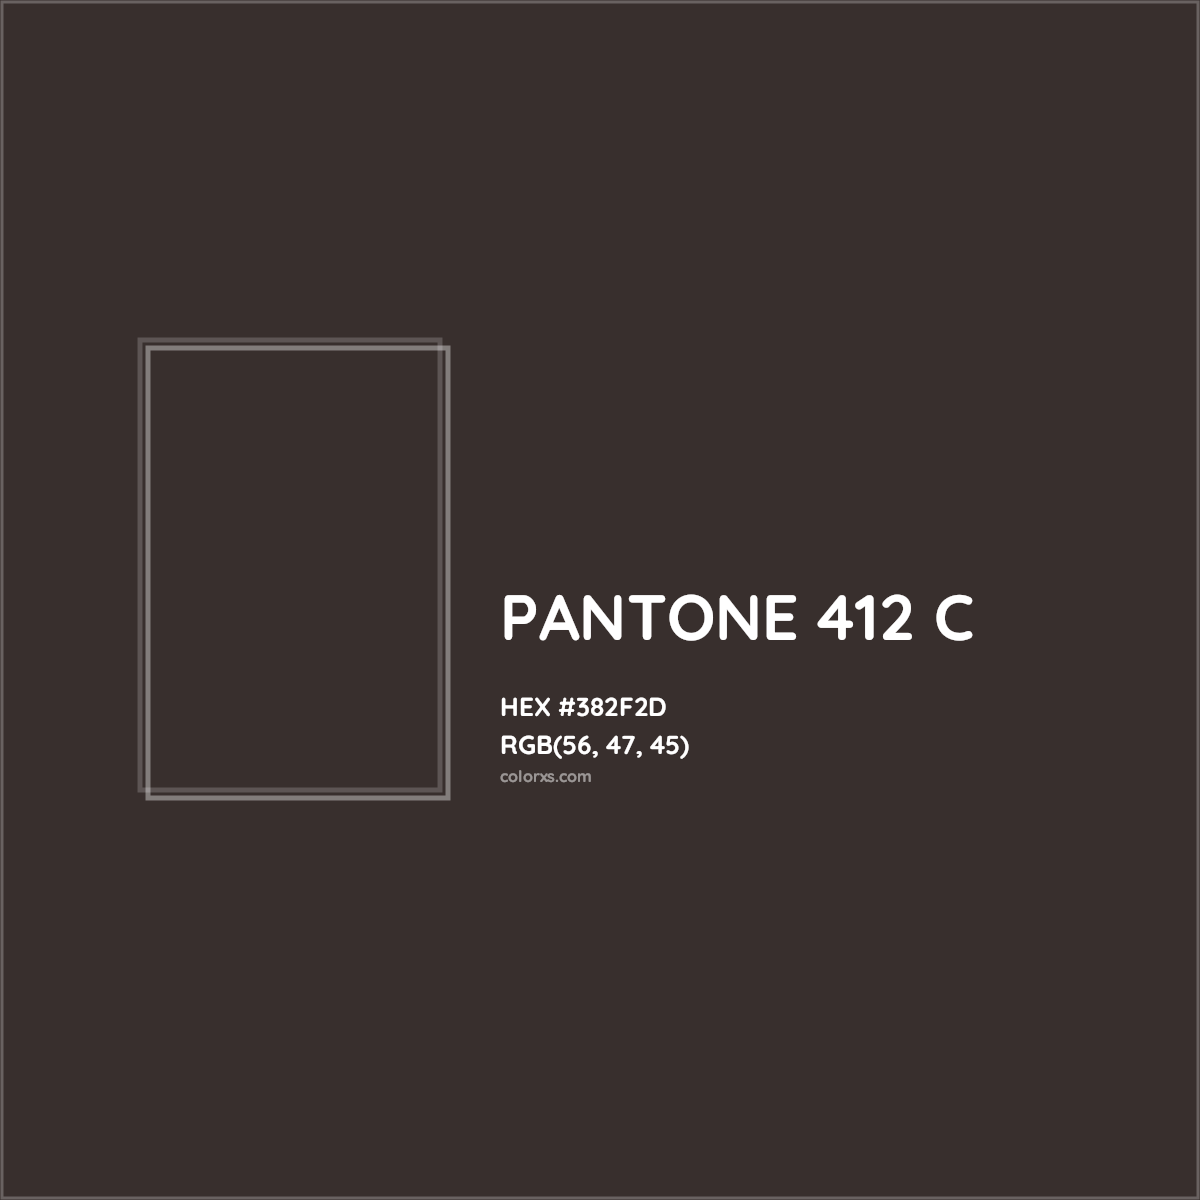 HEX #382F2D PANTONE 412 C CMS Pantone PMS - Color Code